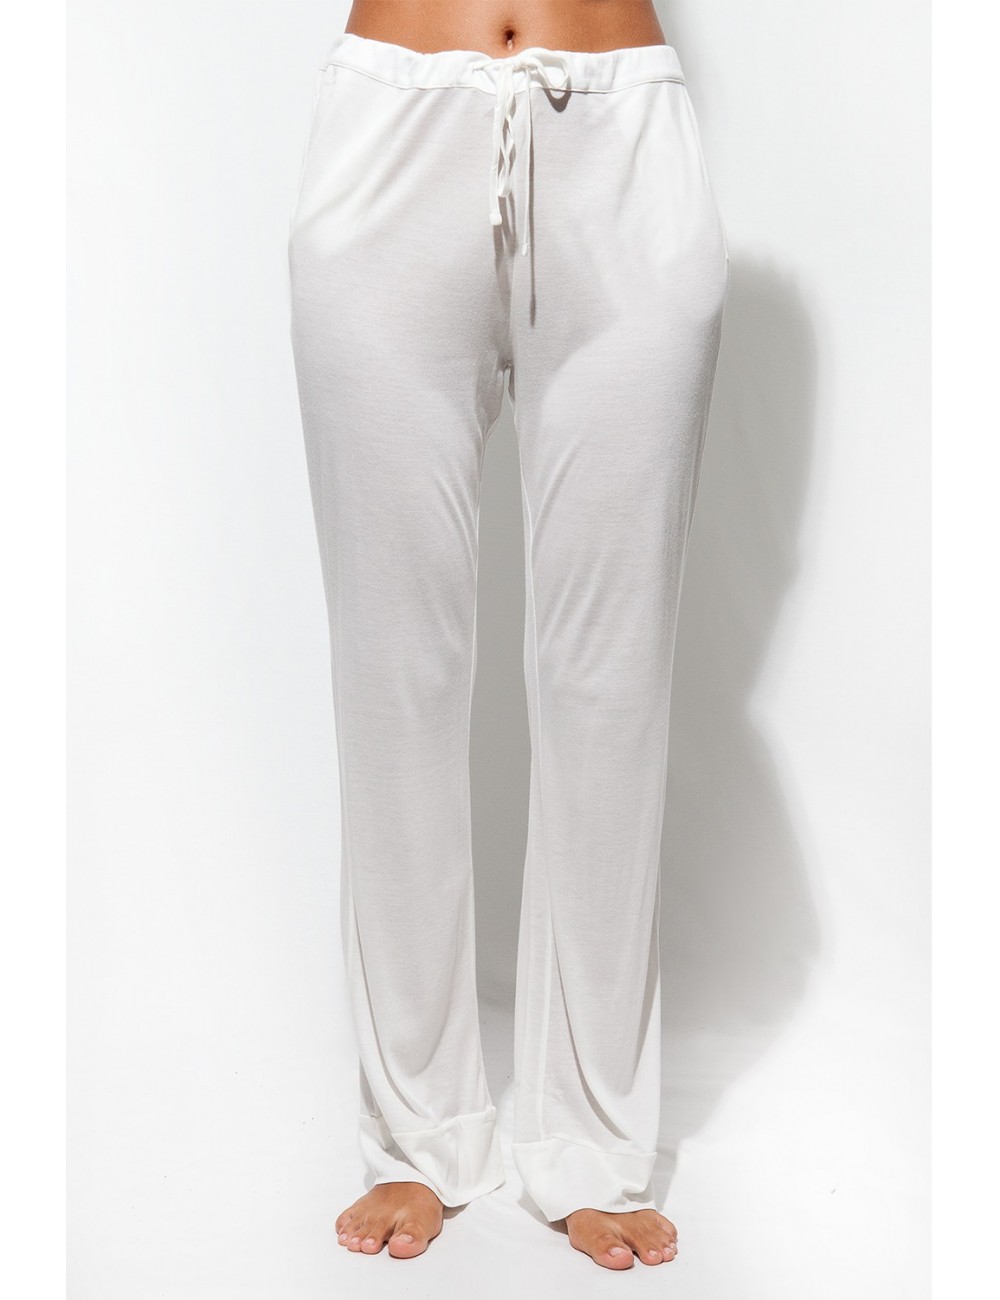 Drawstring Pants - Mercerized Egyptian Cotton - Nourishing - The Back Label  the Wellnesswear